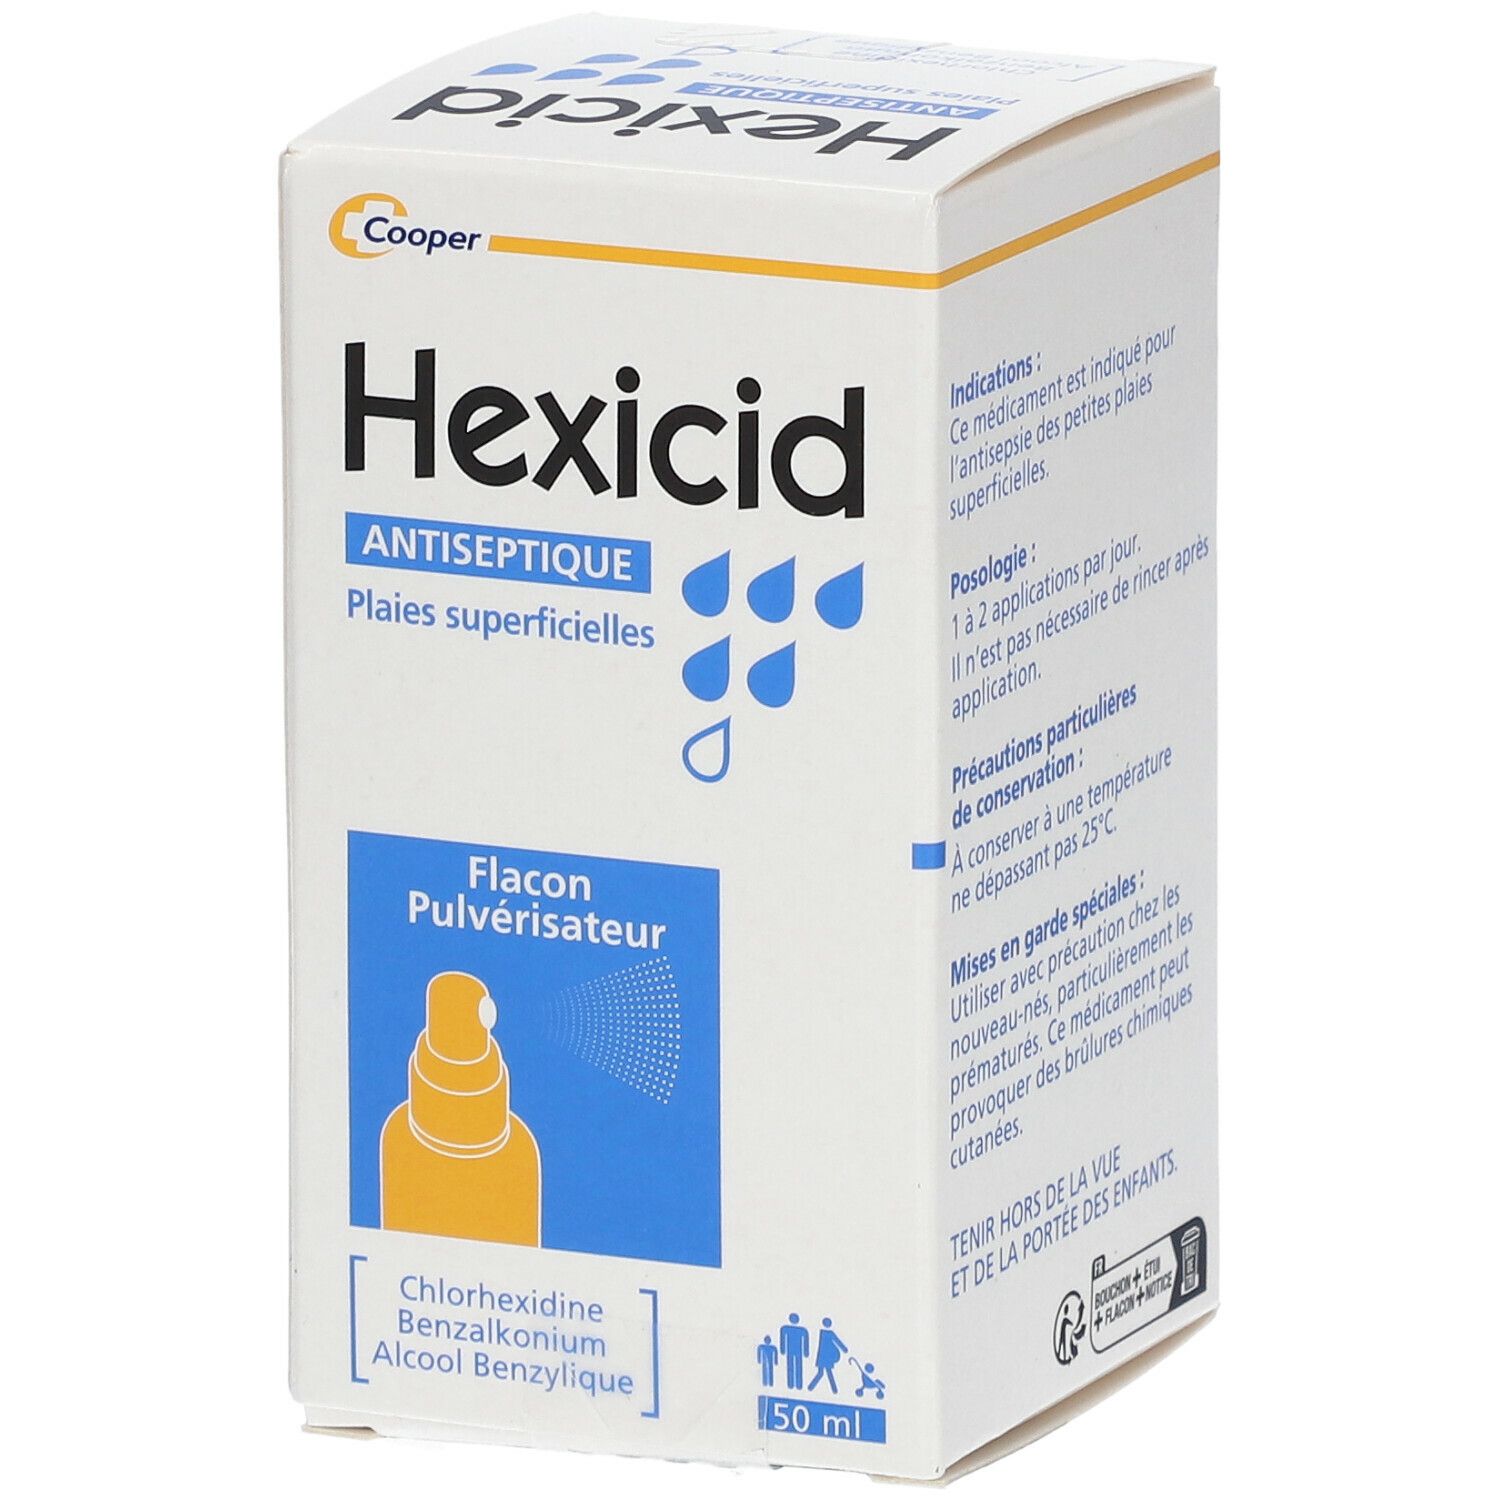 Cooper Hexicid Antiseptique